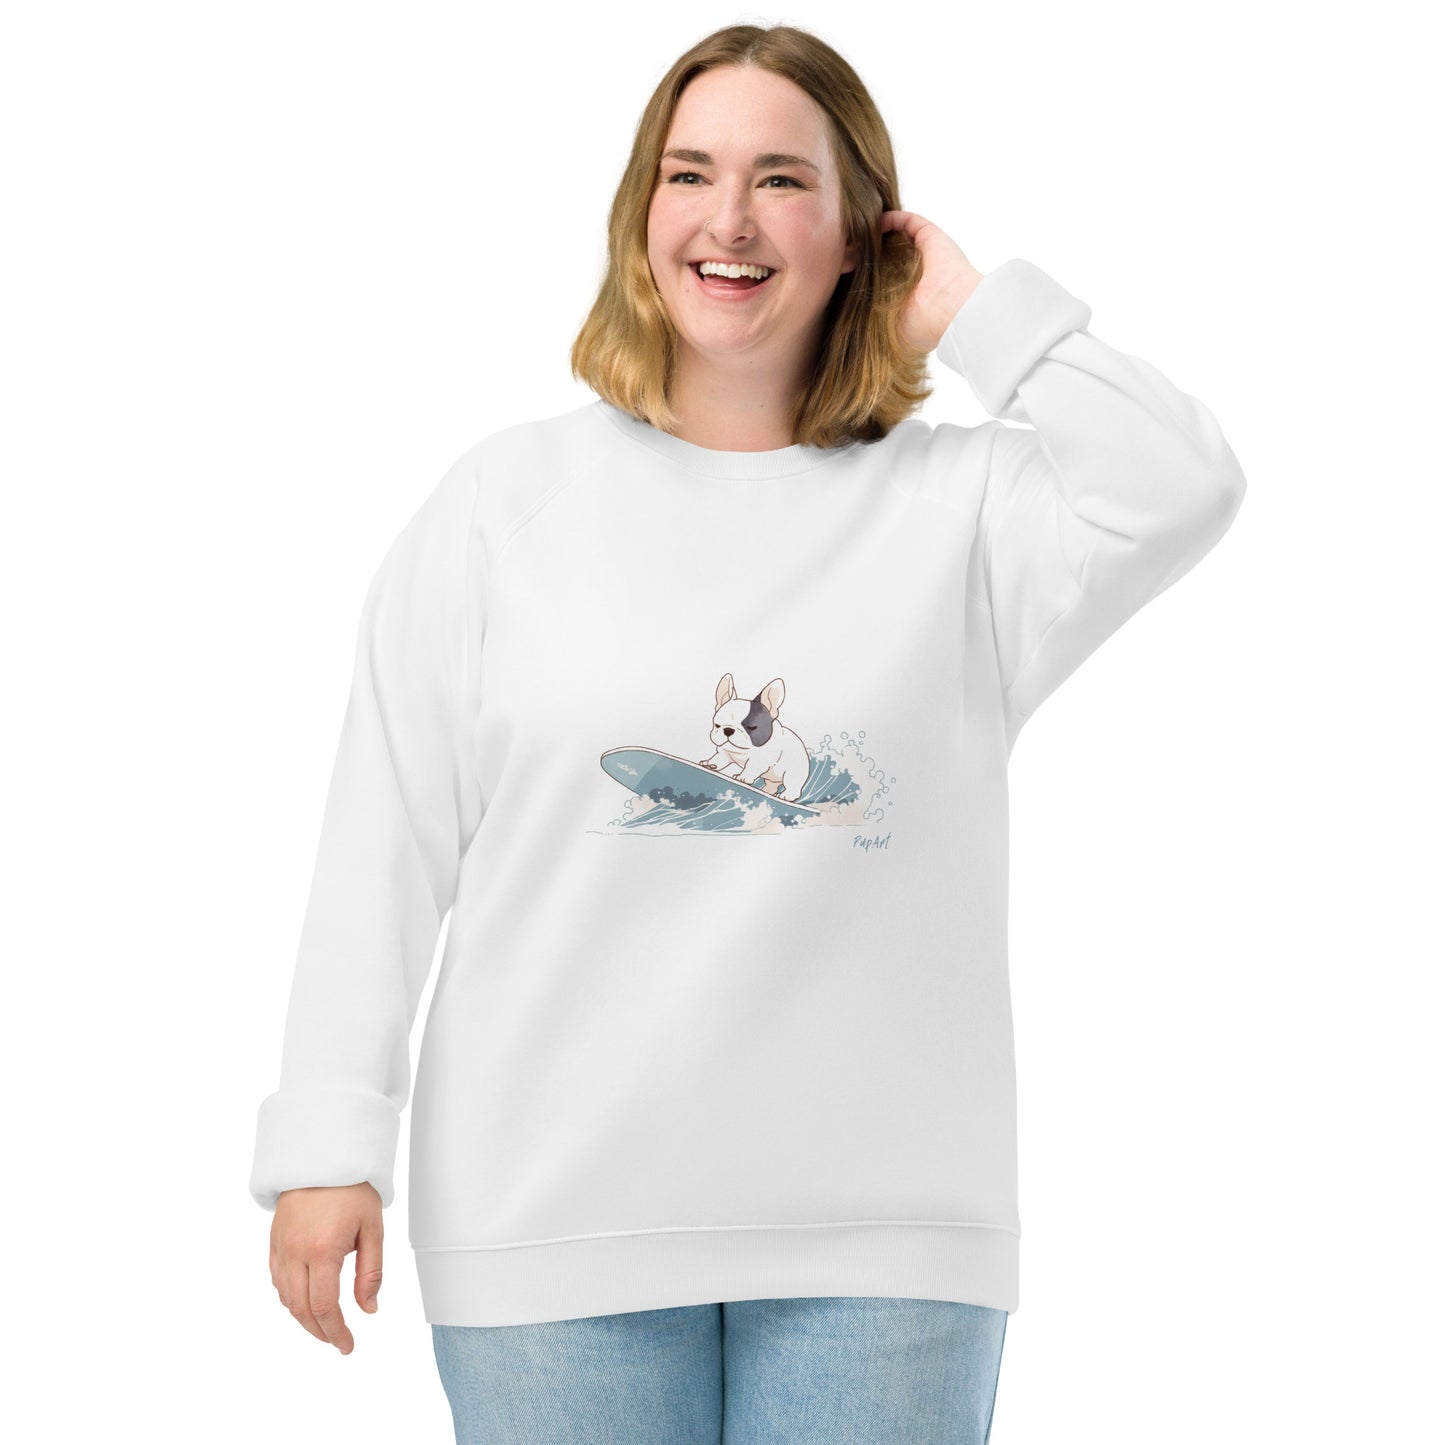 Unisex organic raglan sweatshirt with surfing french bulldog